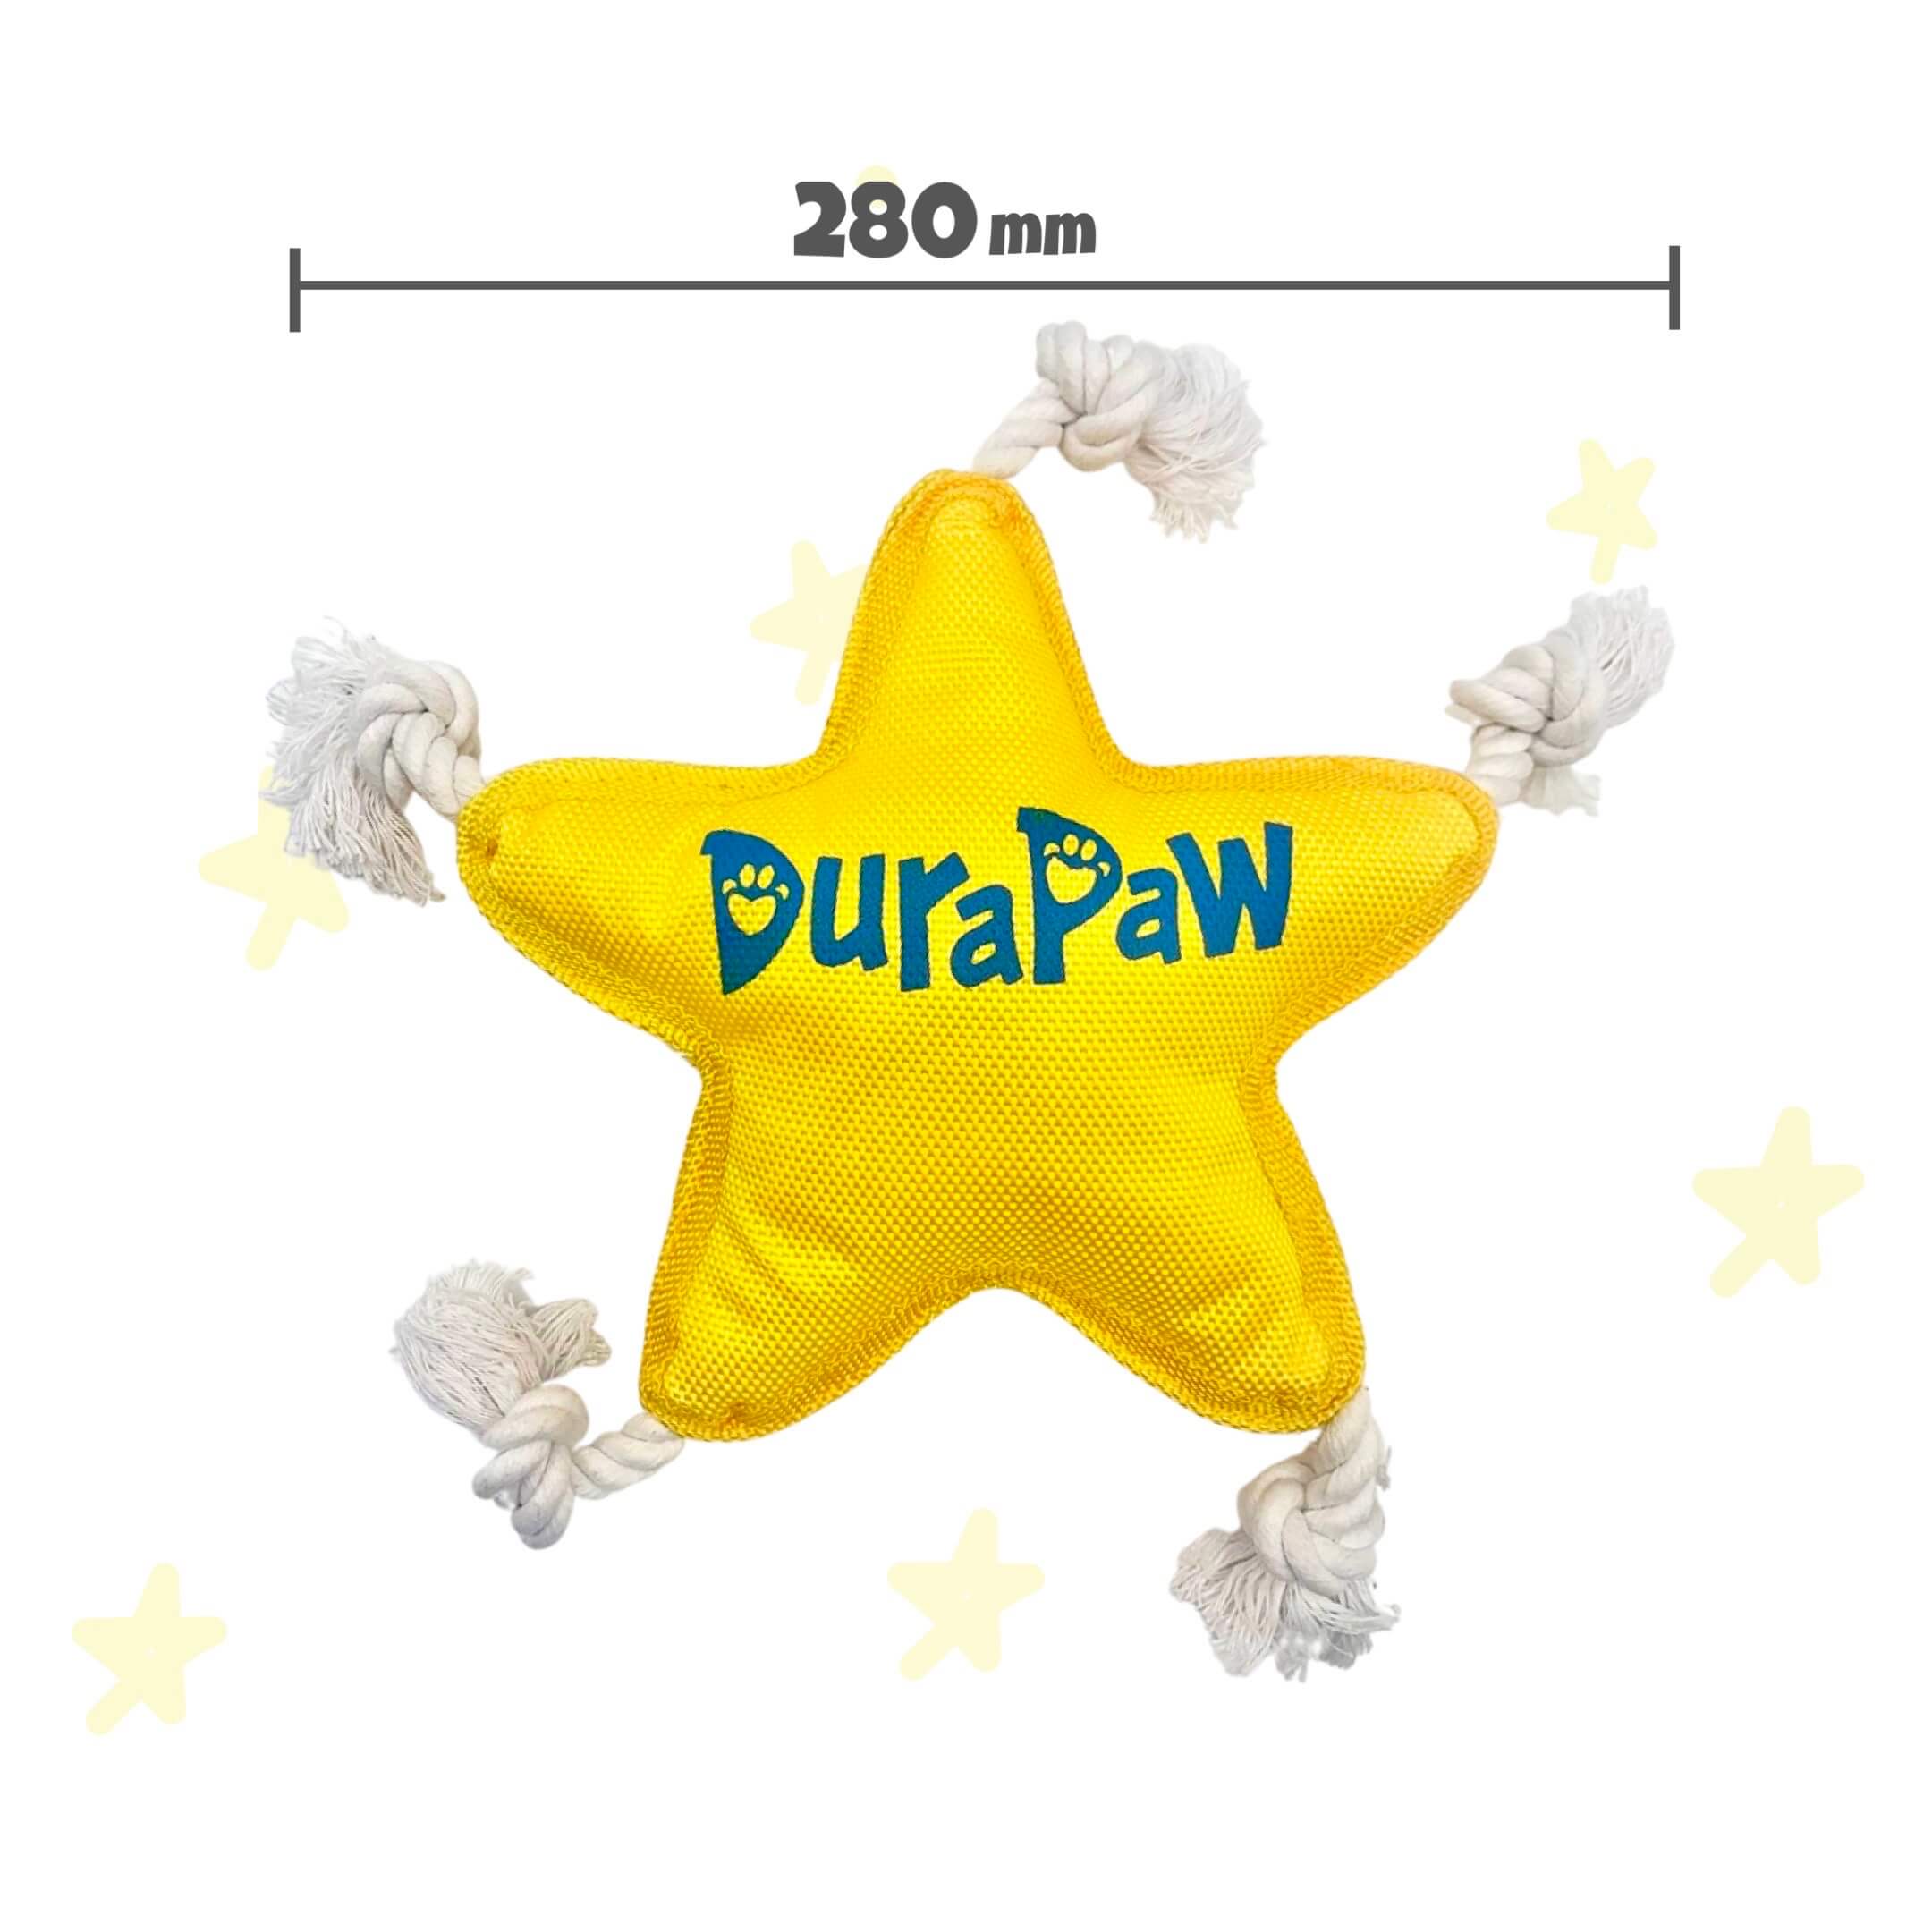 DuraPaw Star Dog Toys Sizing Guide